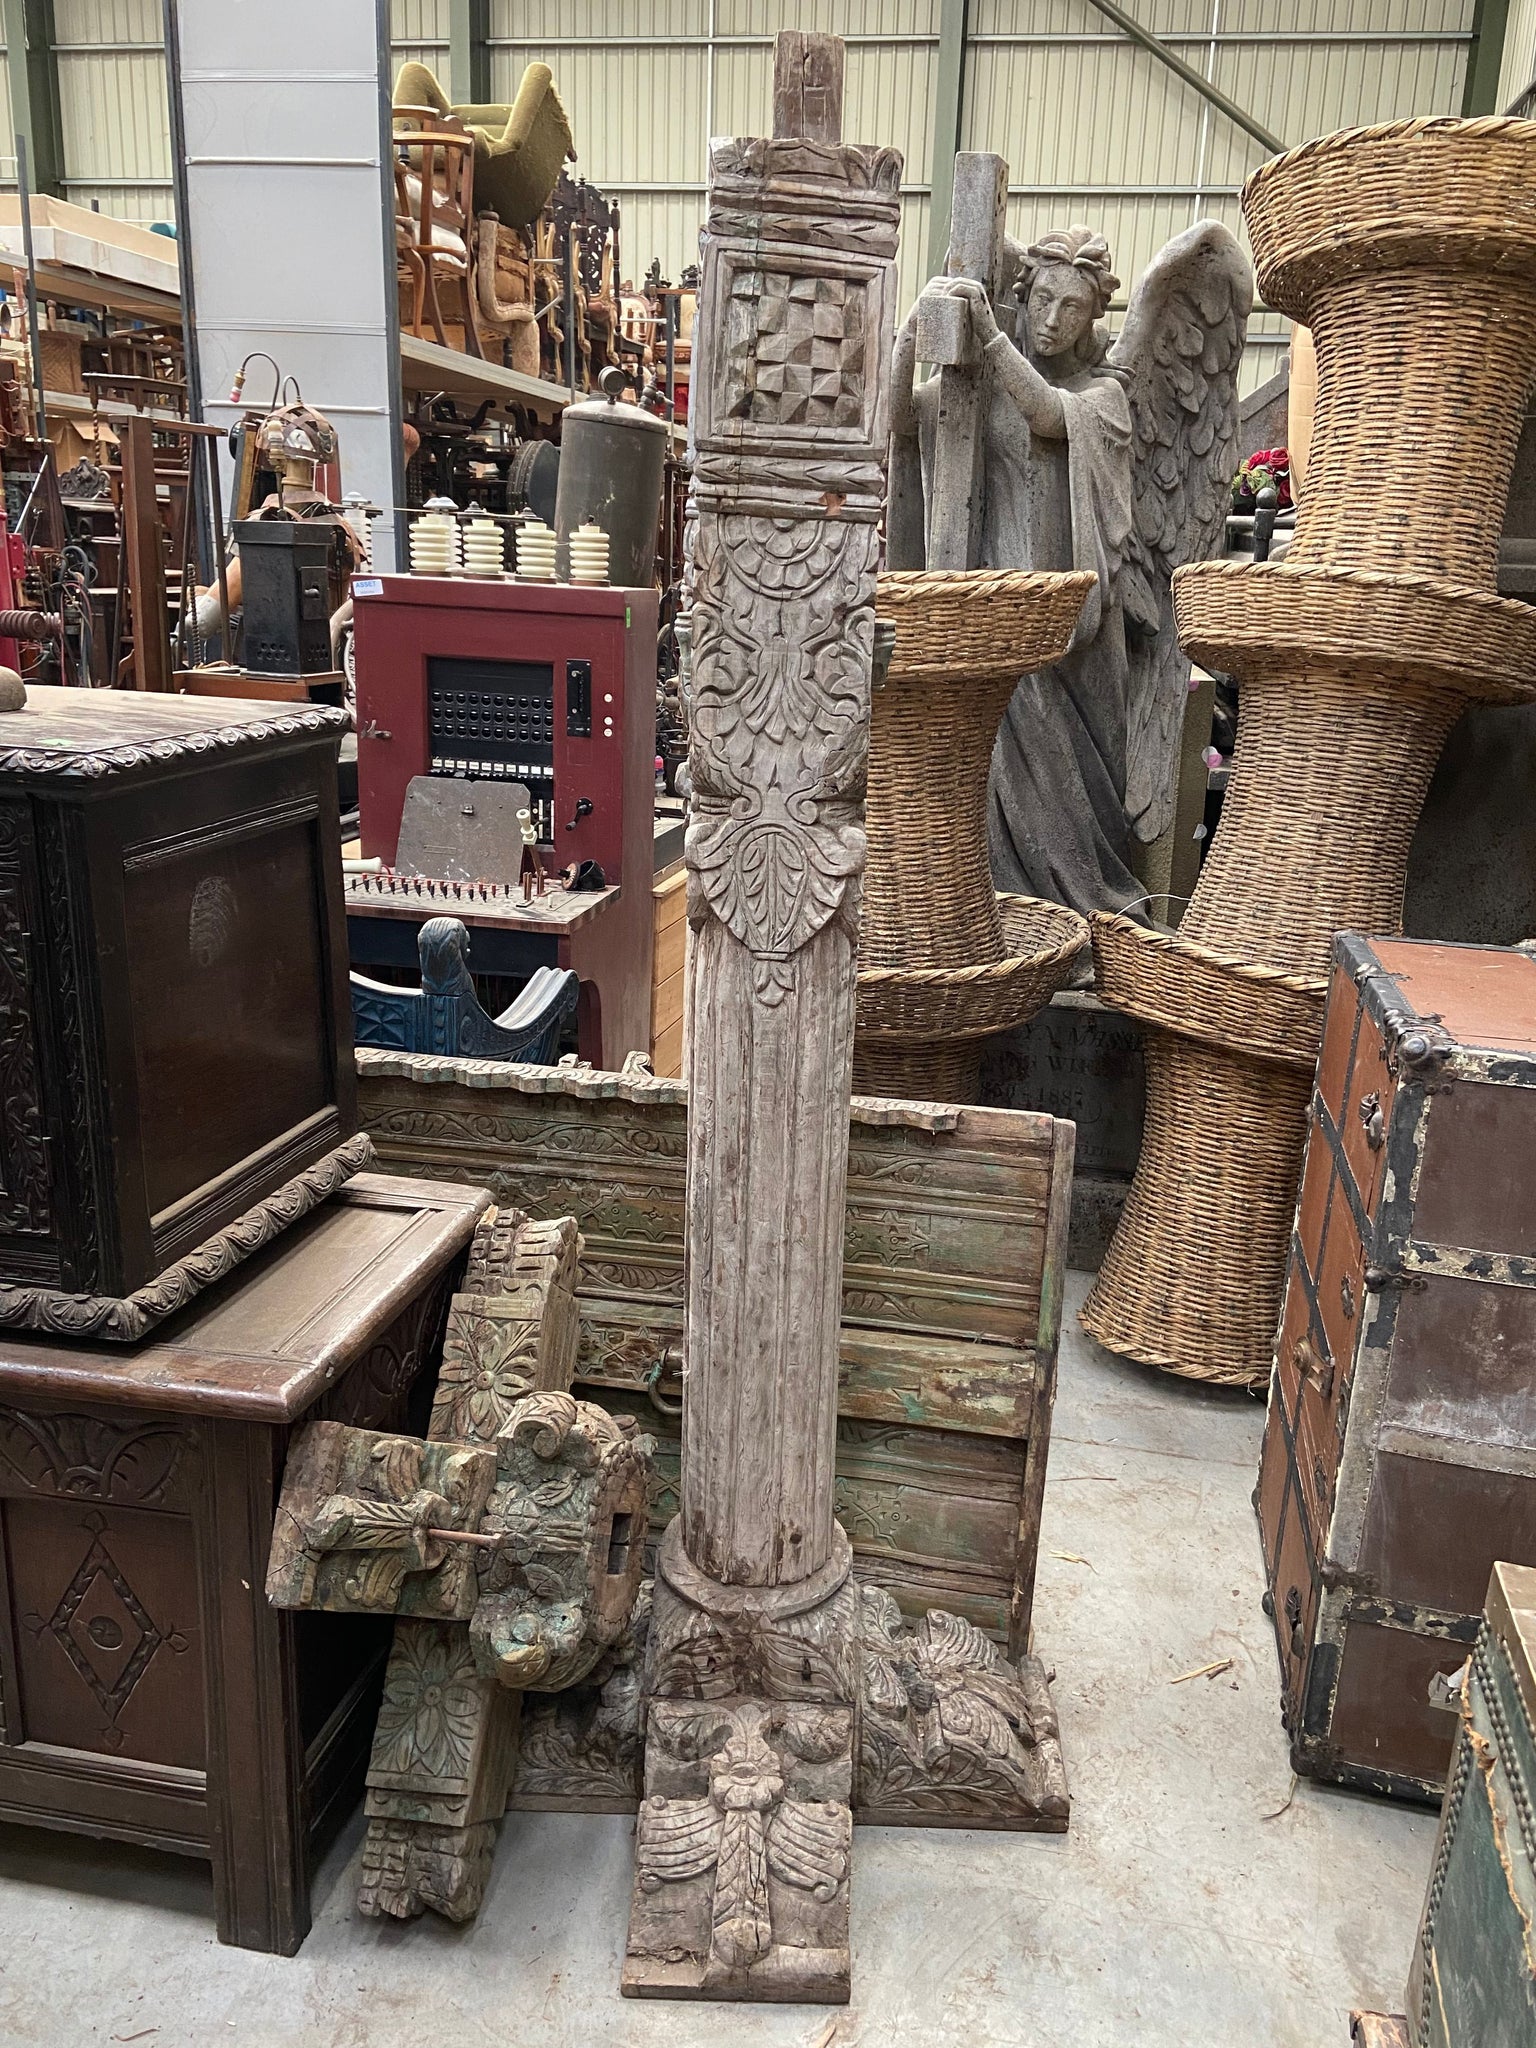 Carved Decorative Columns